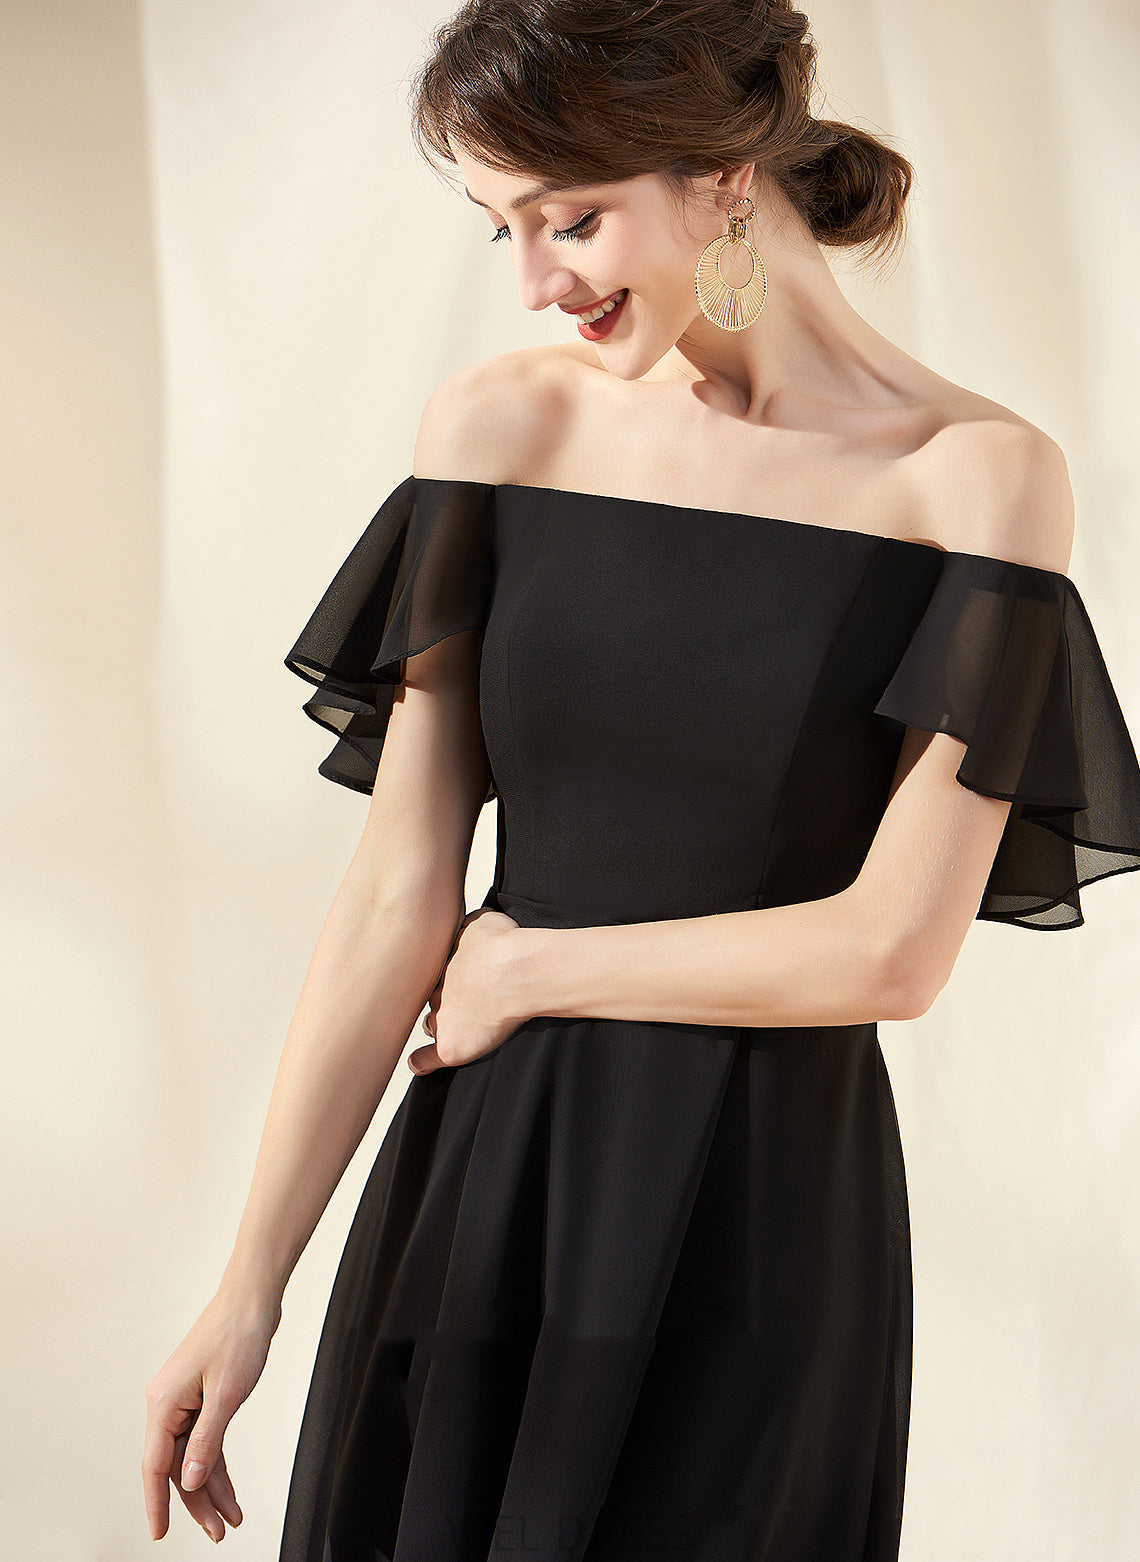 Dress With Off-the-Shoulder A-Line Homecoming Cloe Chiffon Asymmetrical Homecoming Dresses Cascading Ruffles